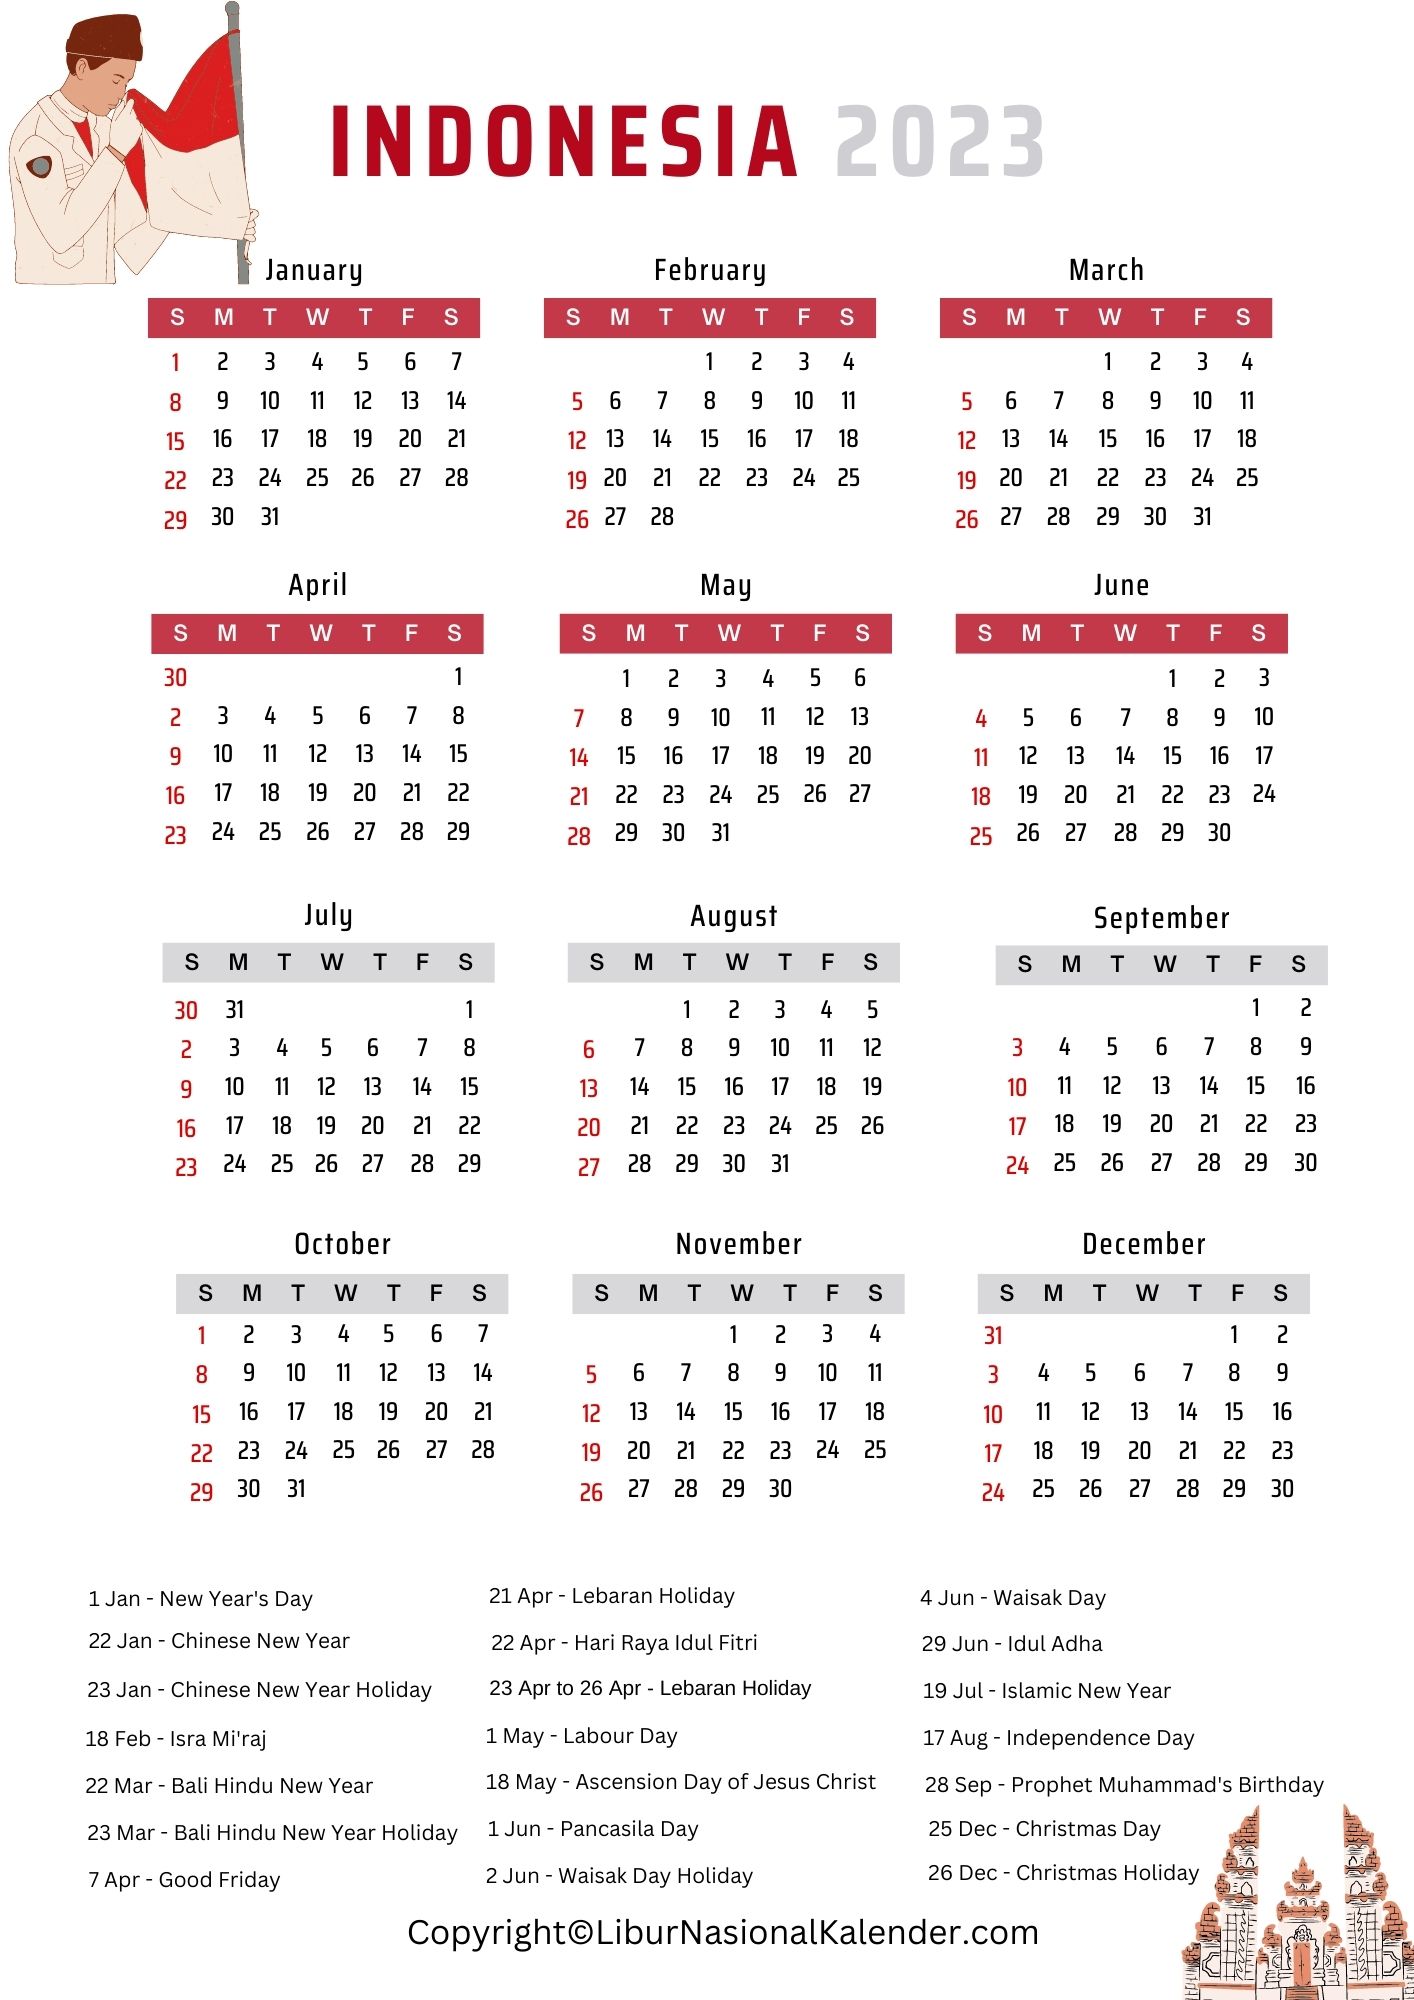 Indonesia Holiday Calendar 2023